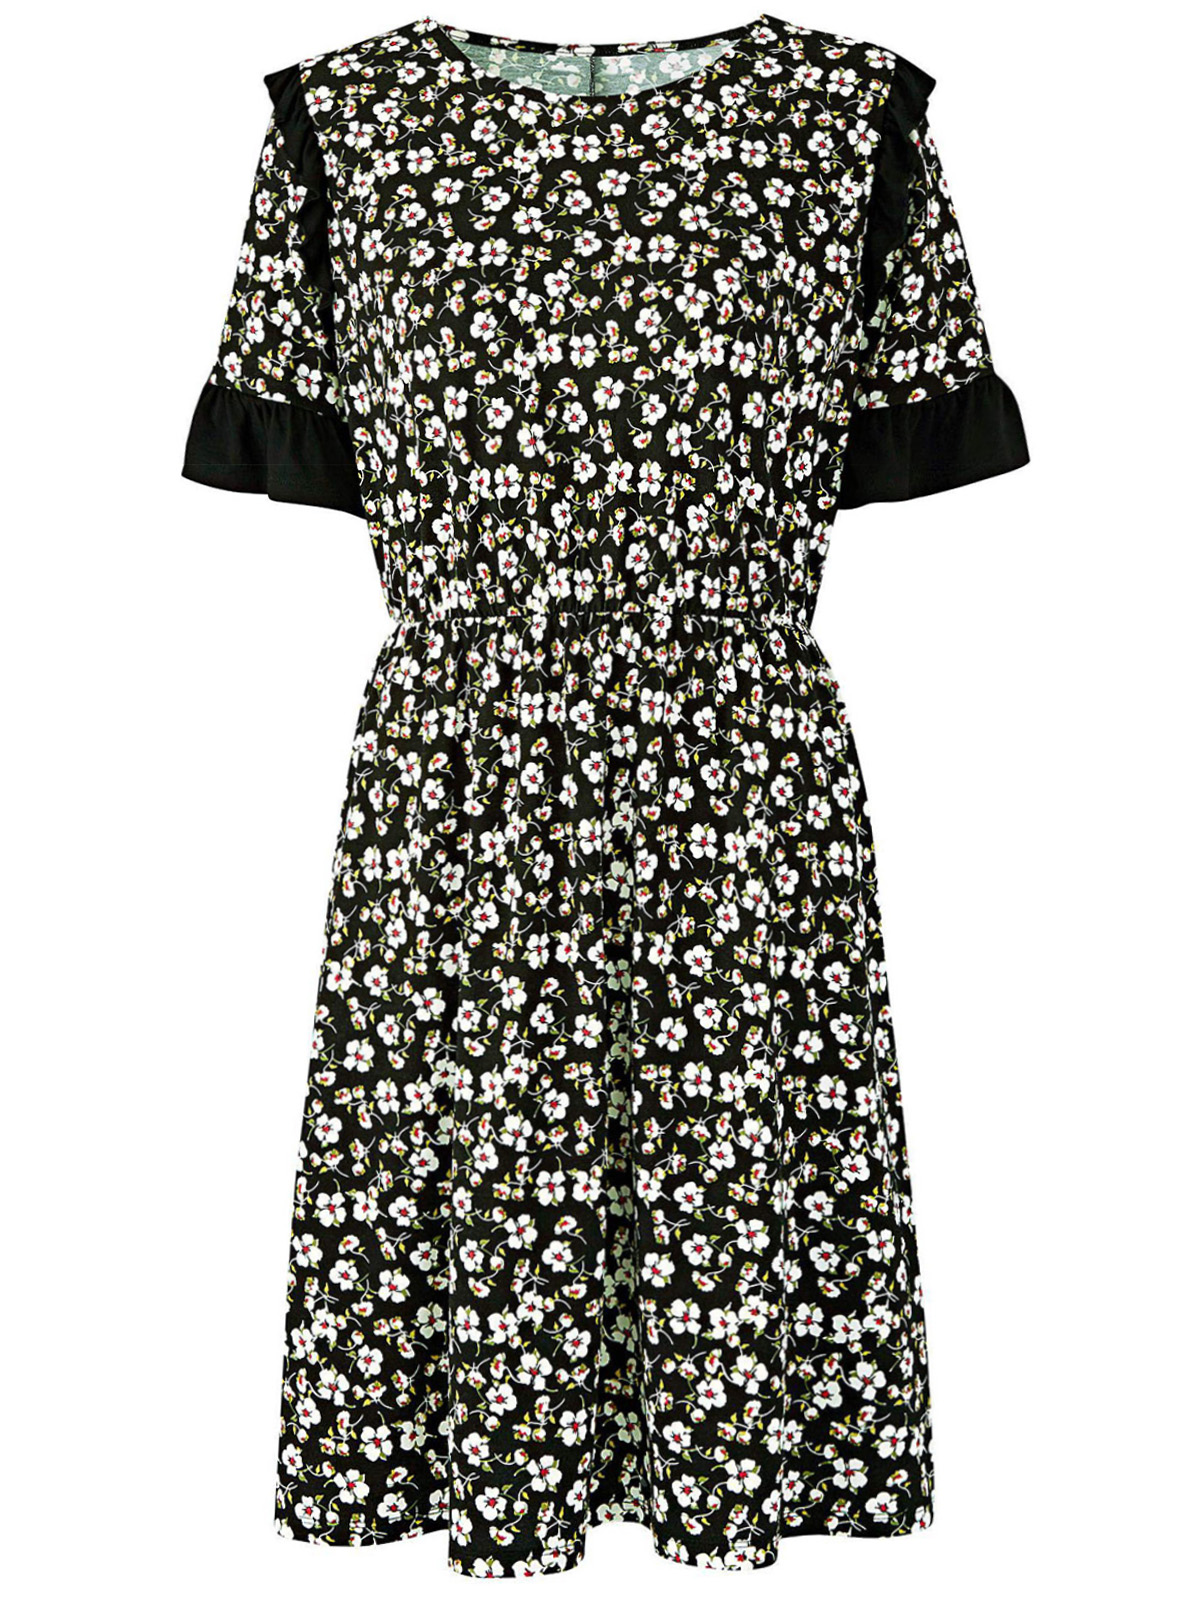 Capsule - - Capsule BLACK Floral Print Ruffle Tea Dress - Plus Size 32